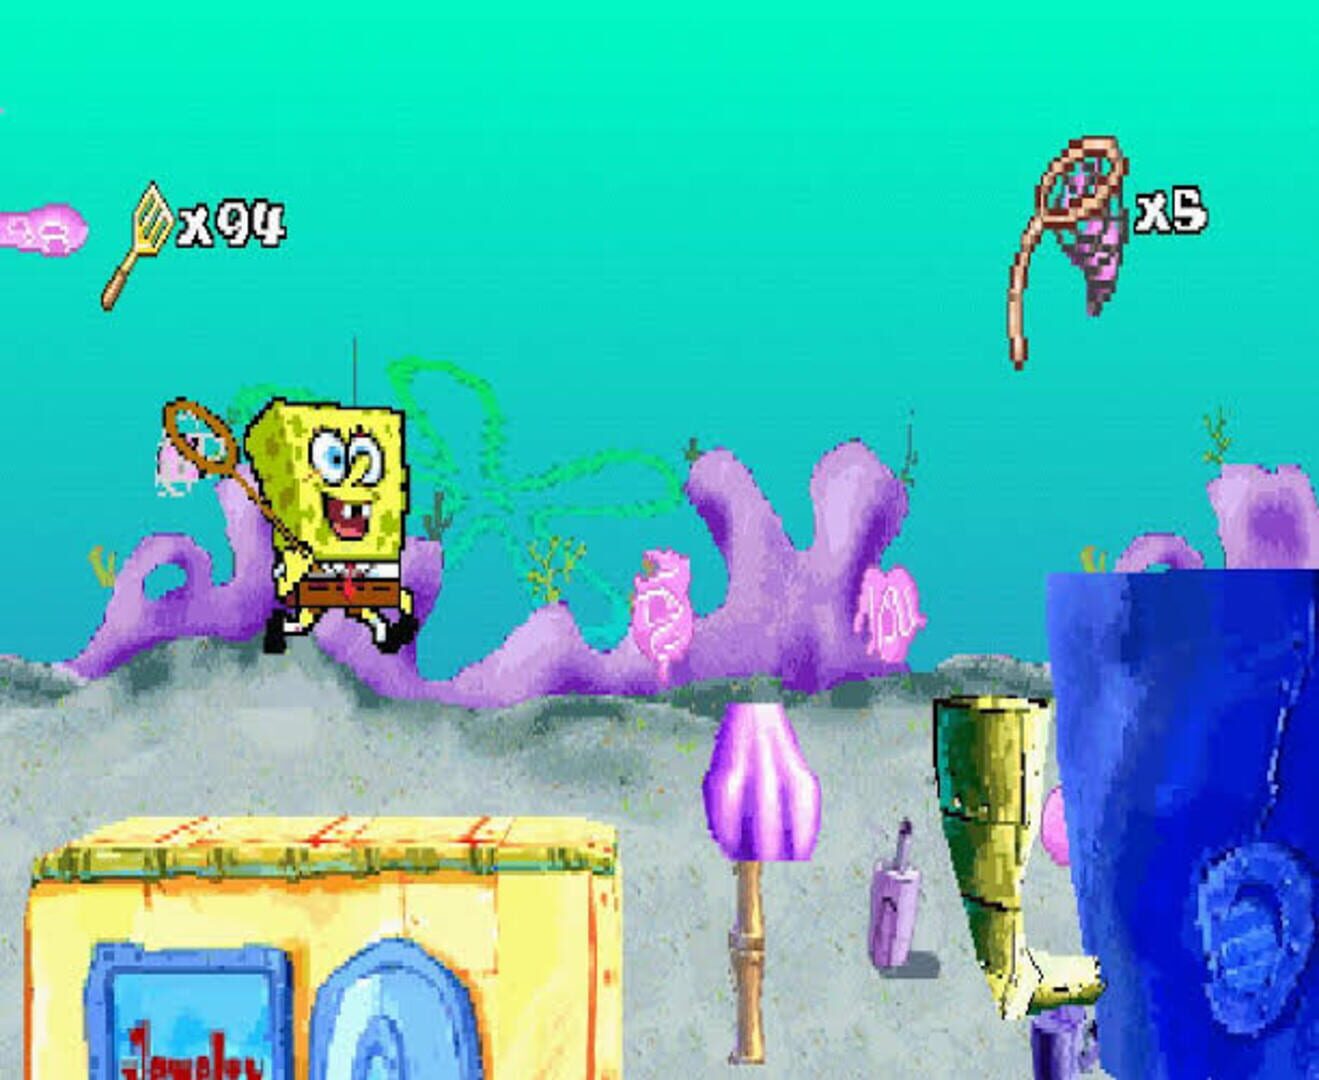 SpongeBob SquarePants: SuperSponge Image